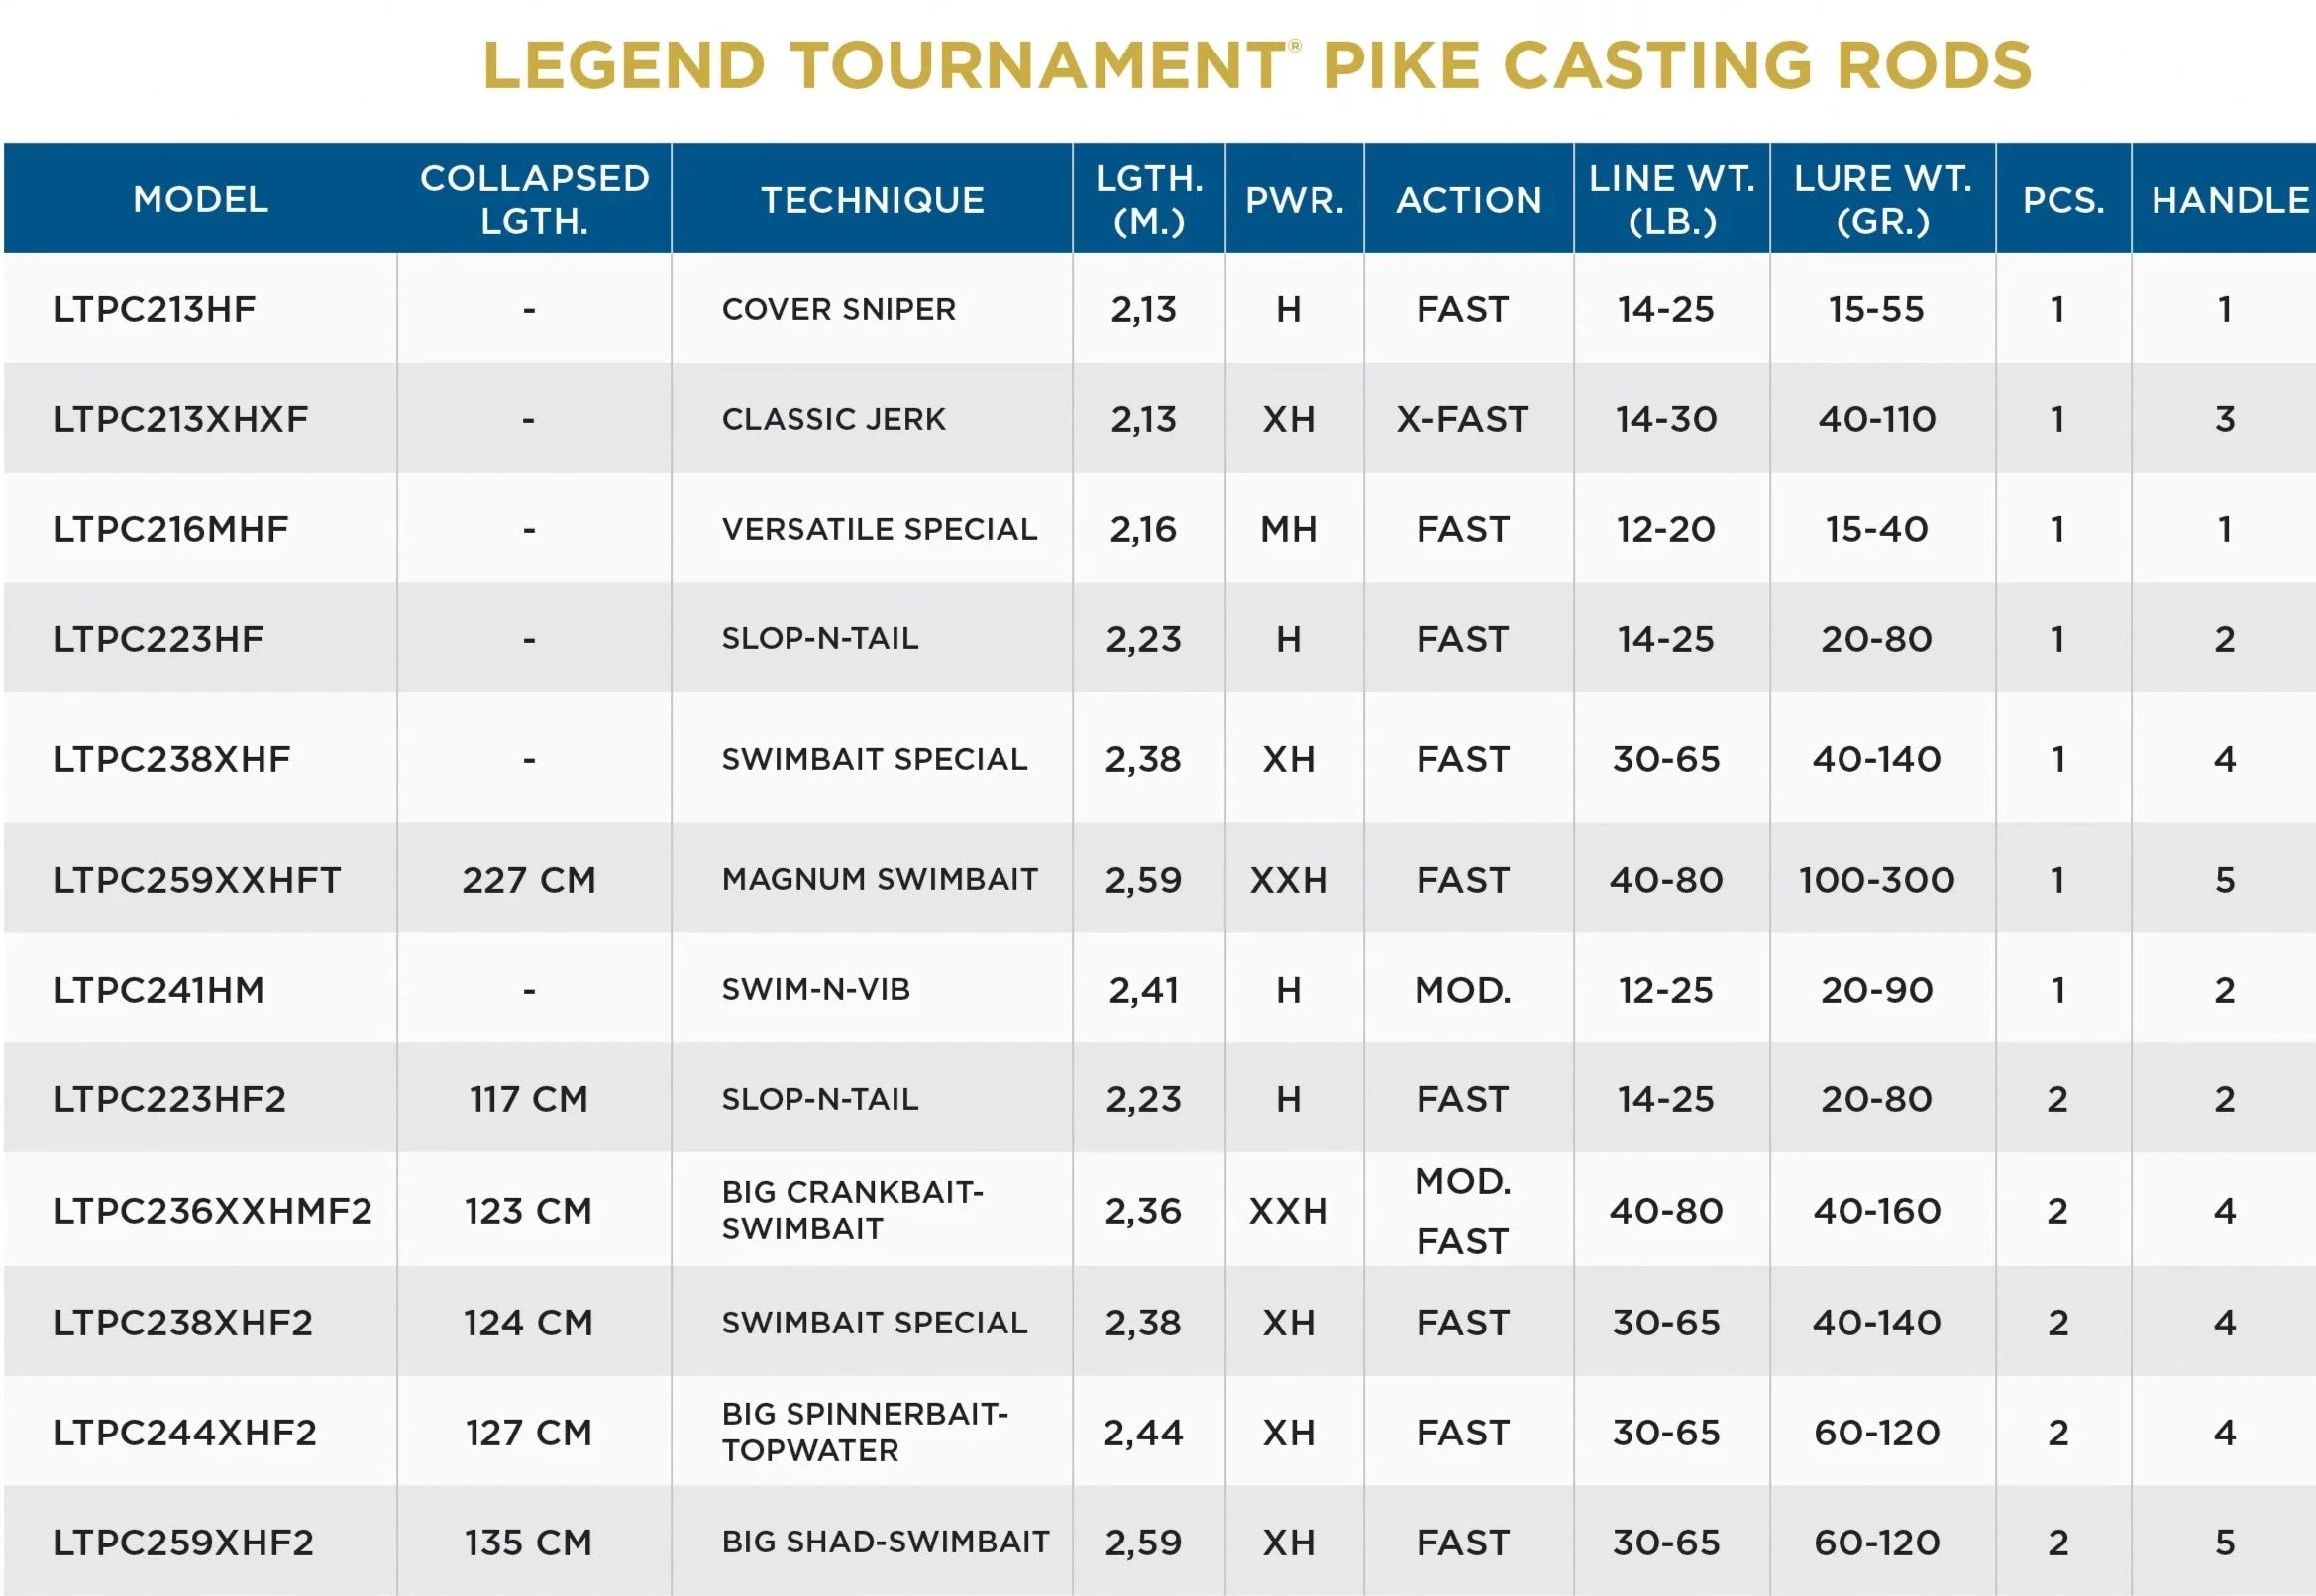 St. Croix Legend Tournament Pike